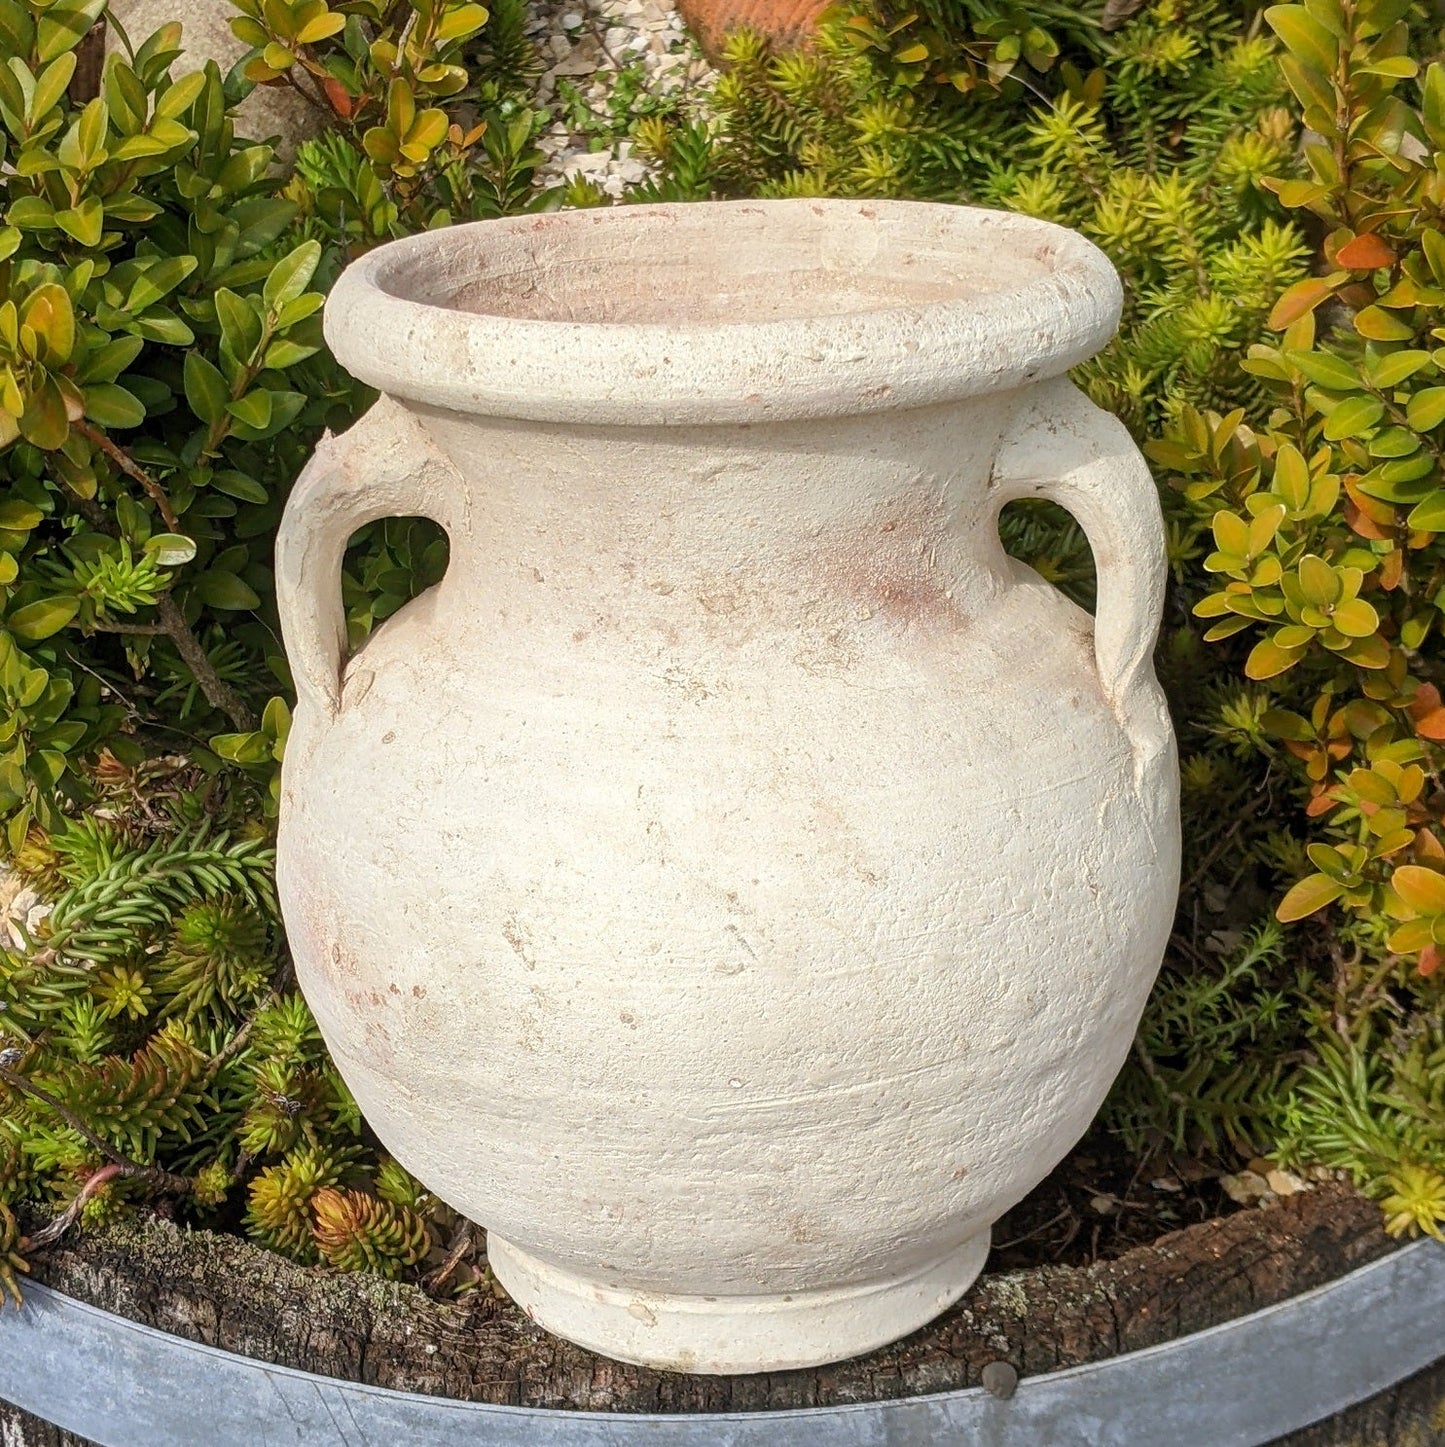 NEU !!!!! Rustikal handgetöpferte bauchige Amphore Krug ca. 23 cm hoch aus Terracotta, Deko, Vase , Mediterran